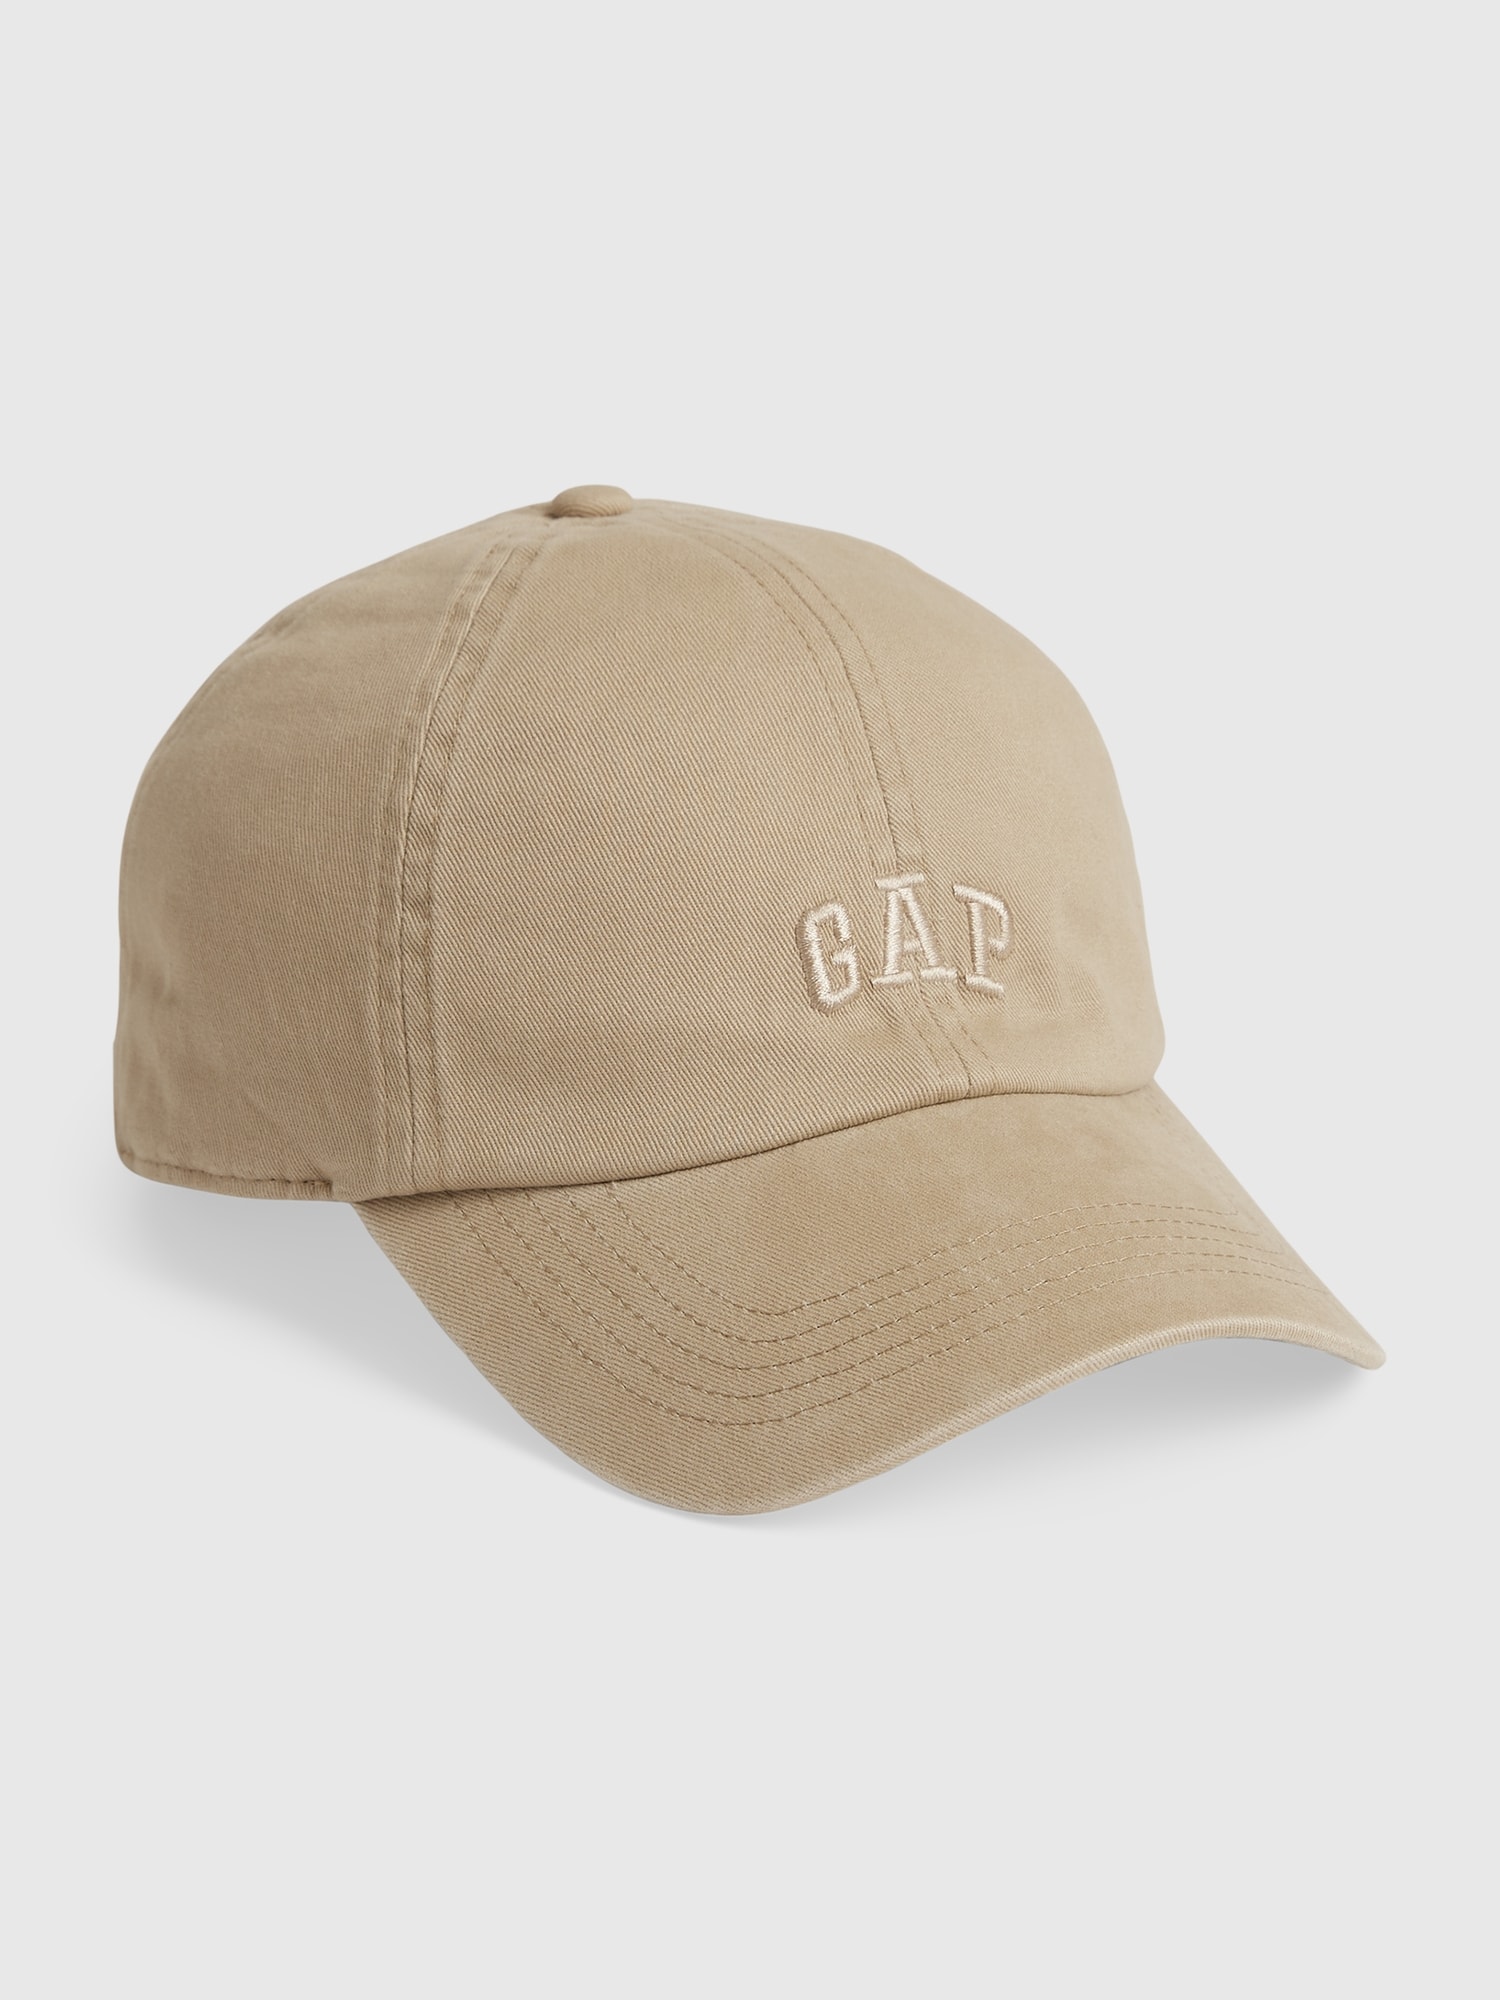 Cap with logo GAP - Men